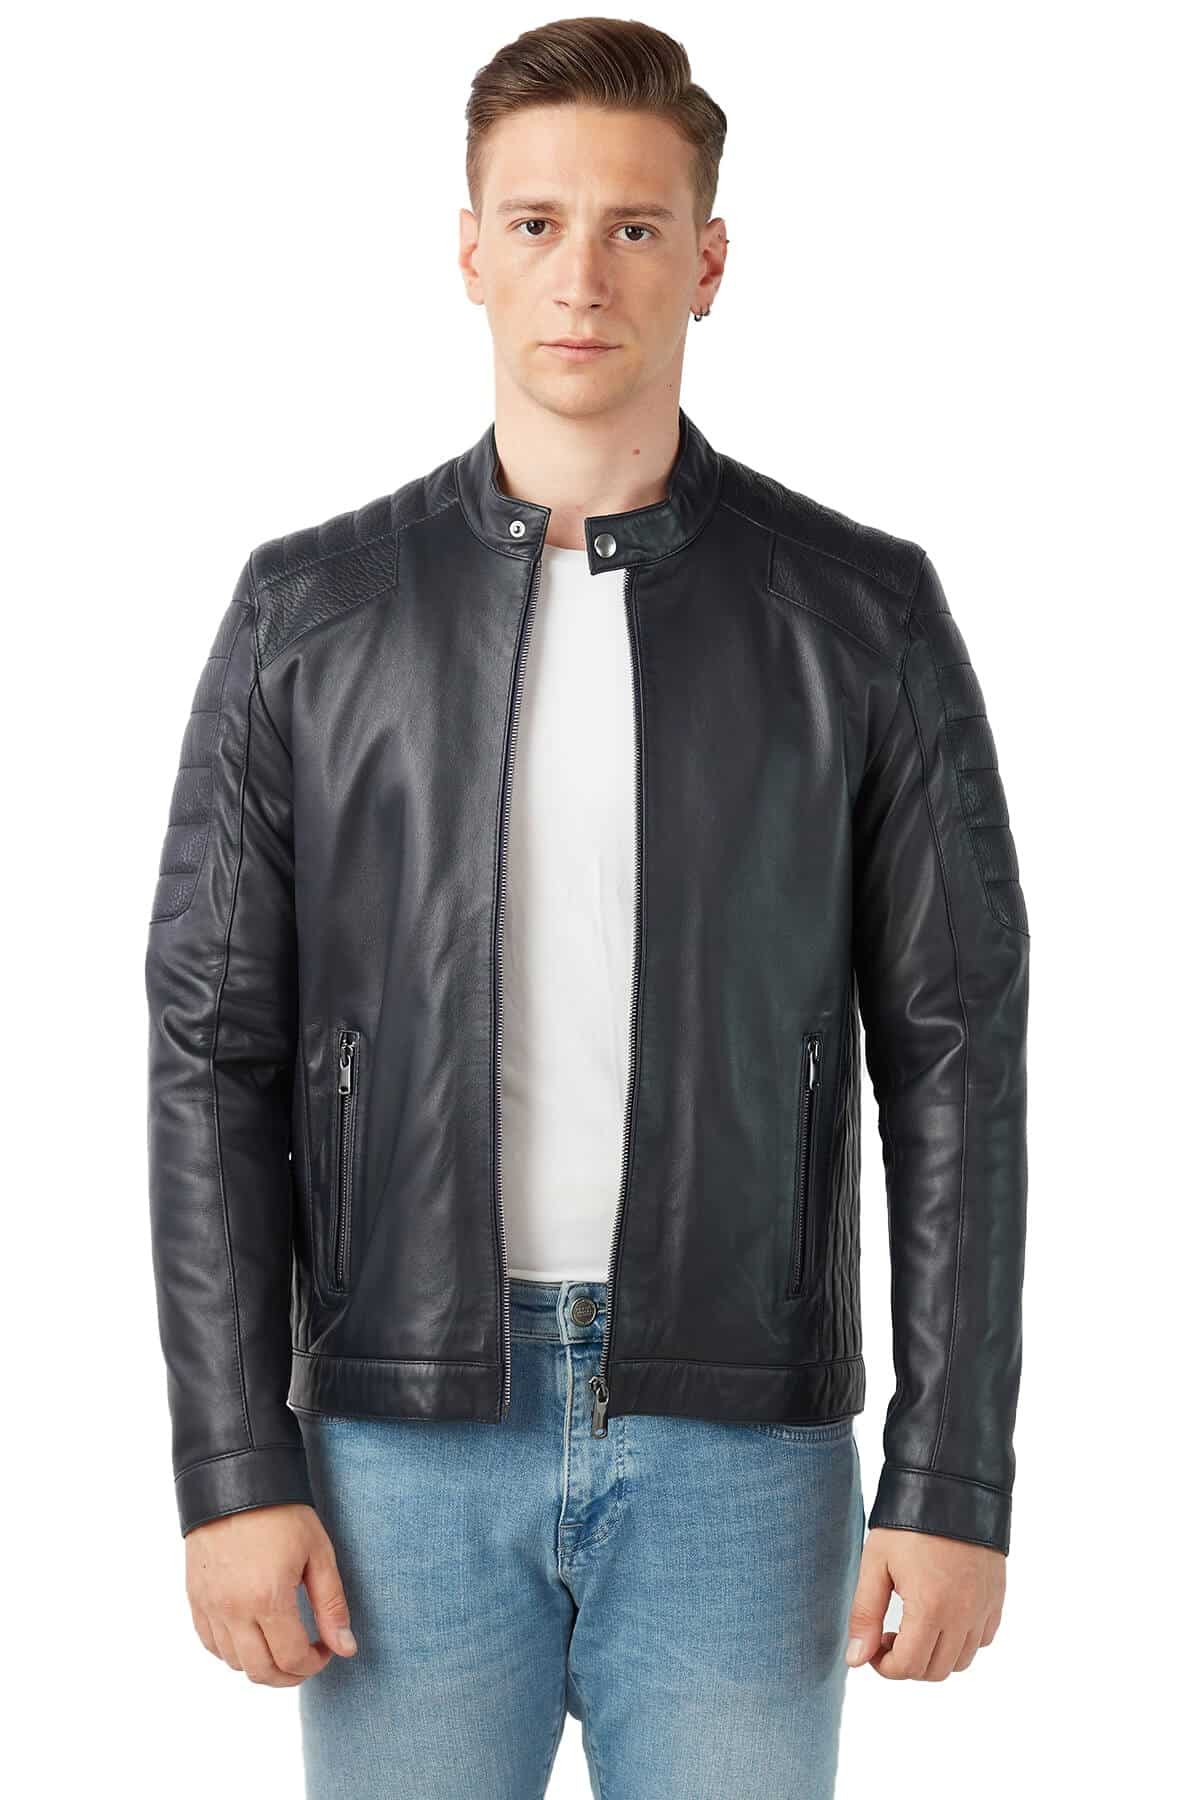 Orlando Navy Blue Genuine Leather Jacket - Urban Fashion Studio